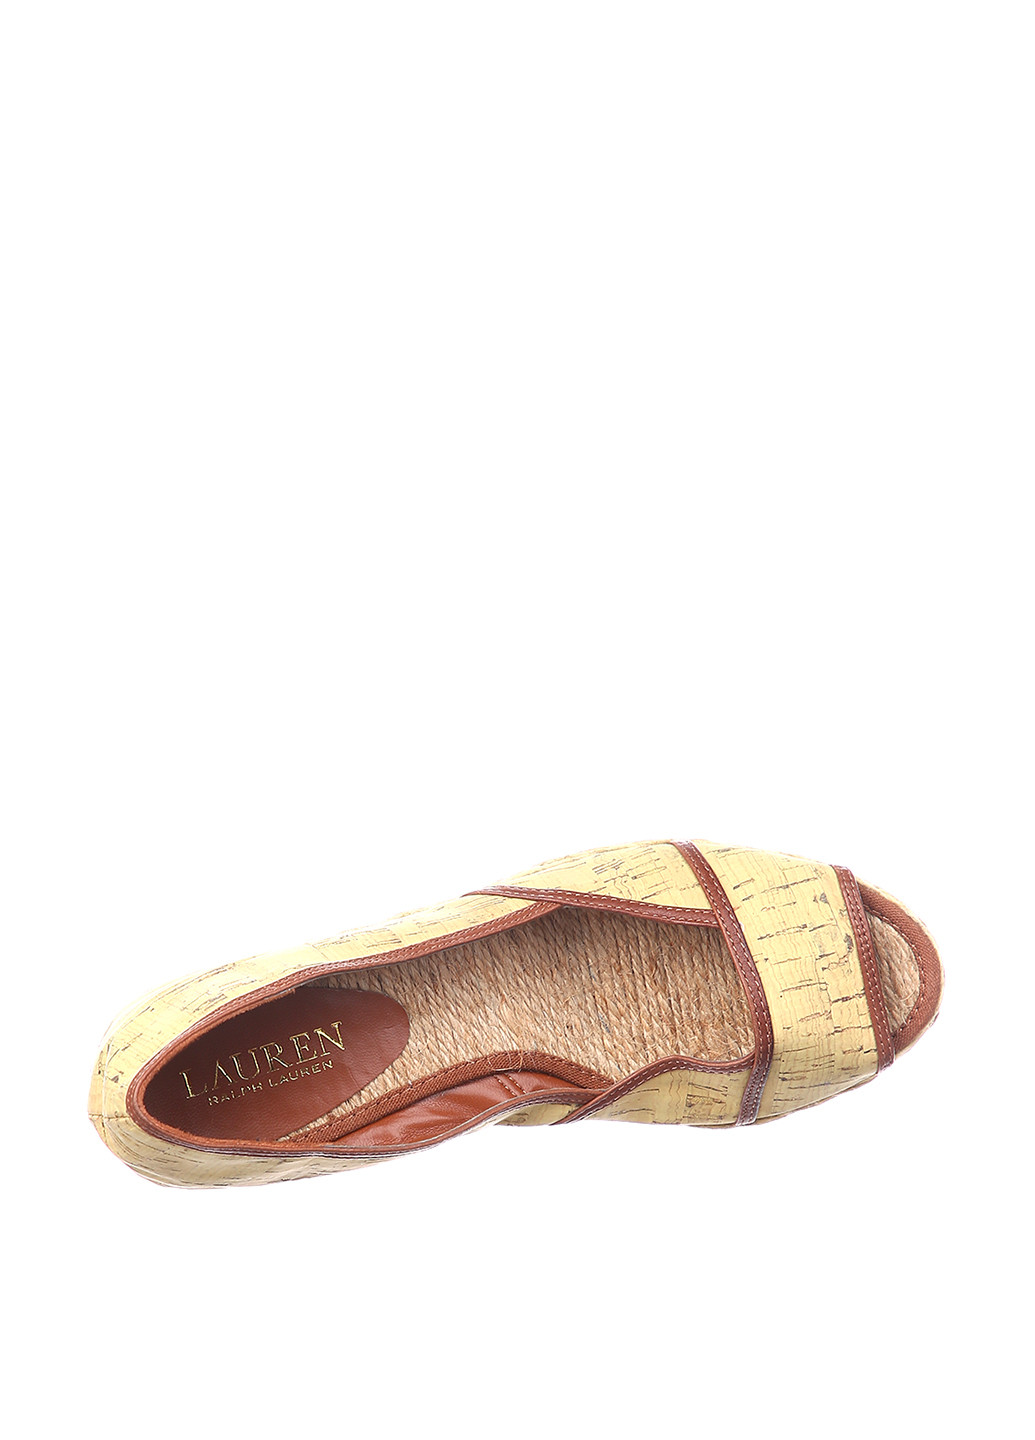 Туфли Ralph Lauren на танкетке на плетеной подошве